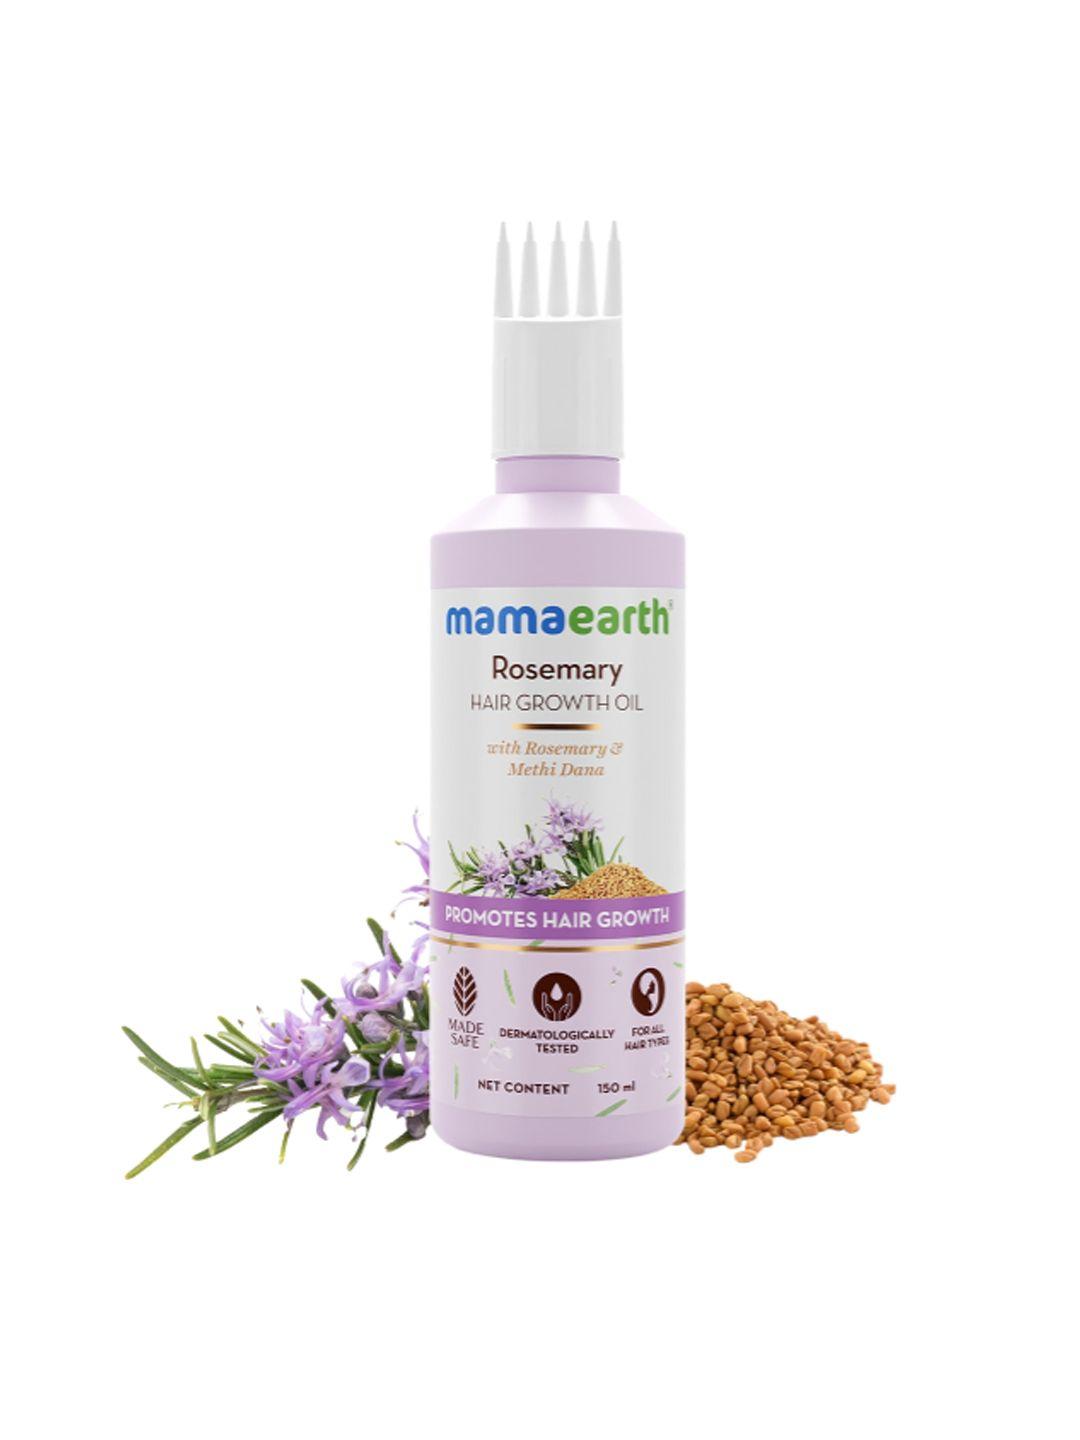 mamaearth rosemary hair growth oil with rosemary & methi dana - 150 ml